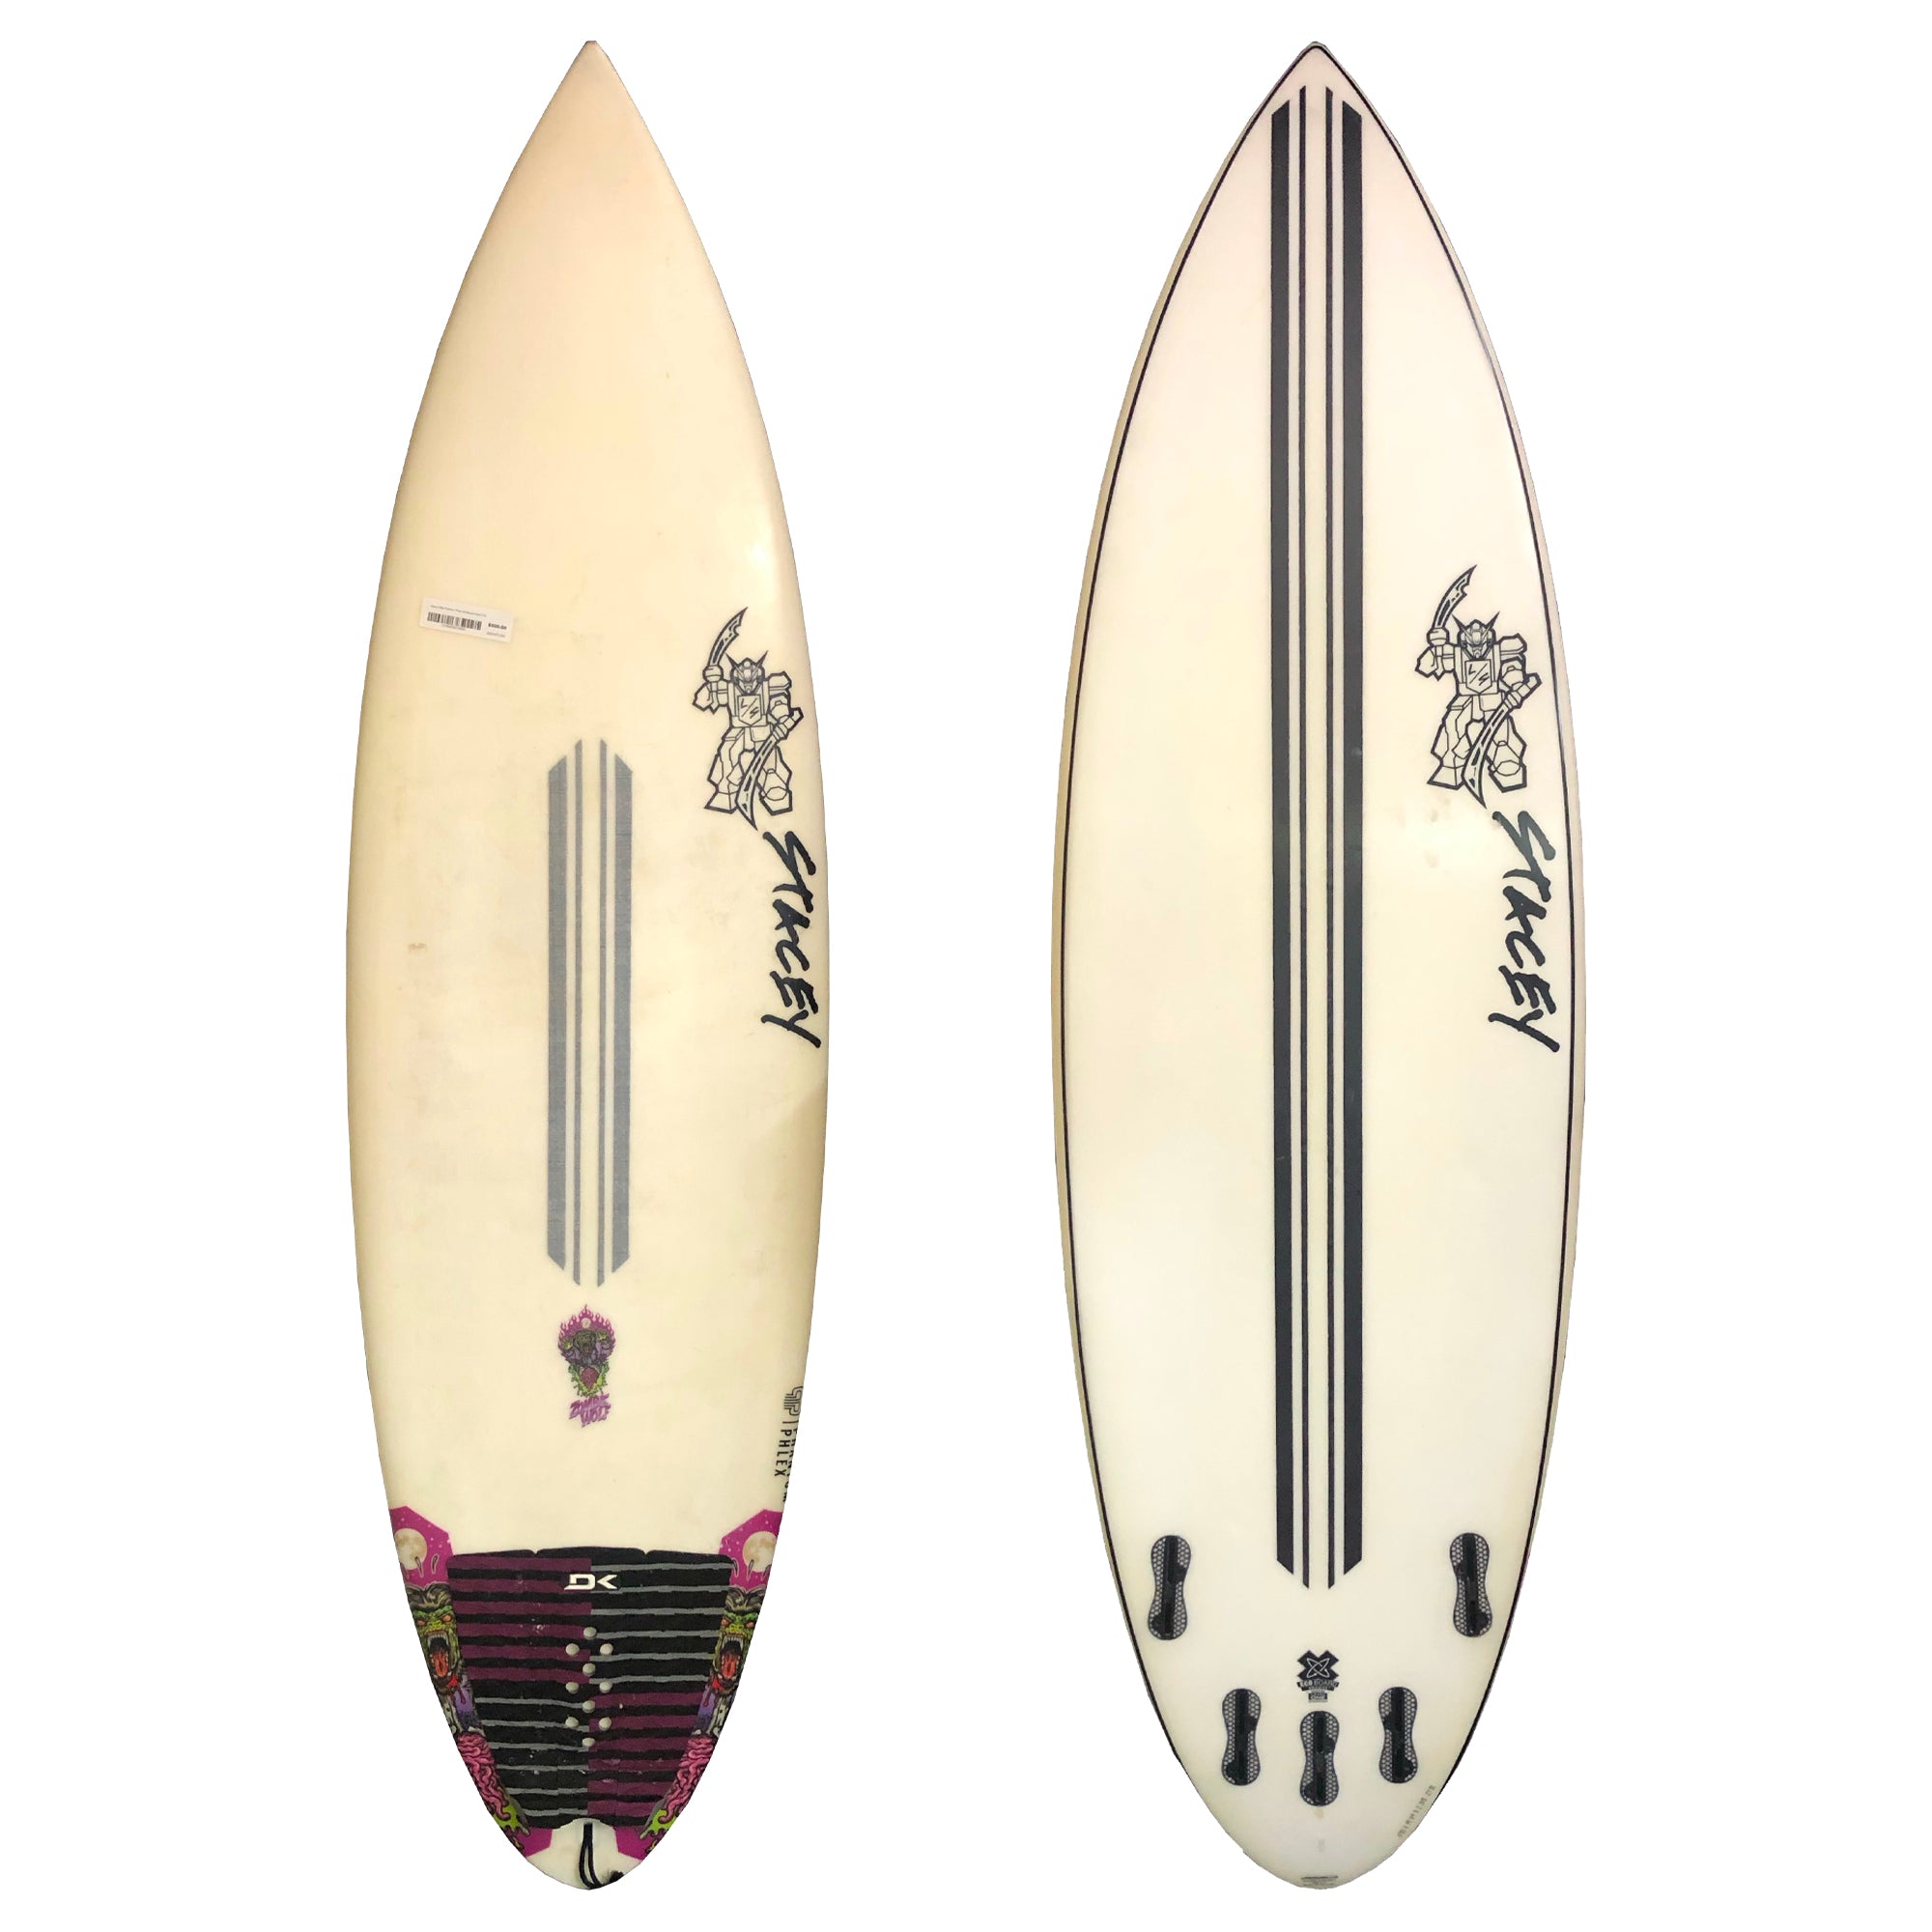 Stacey Phantom Phlex 5'10 Used Surfboard